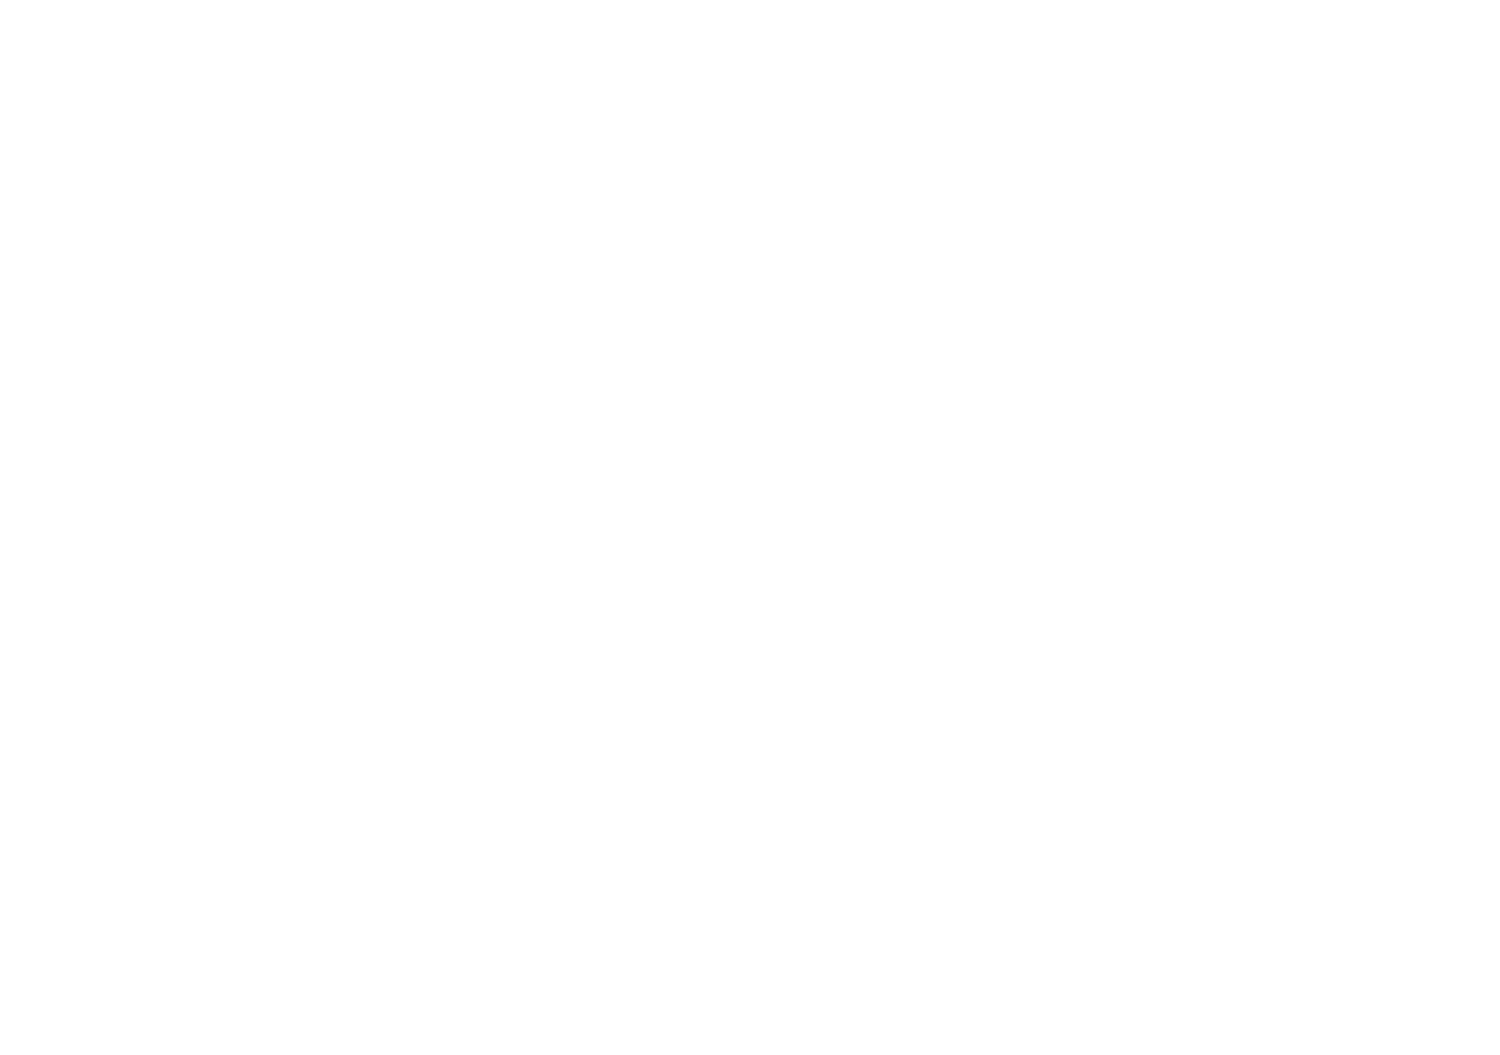 YBB CONNECT